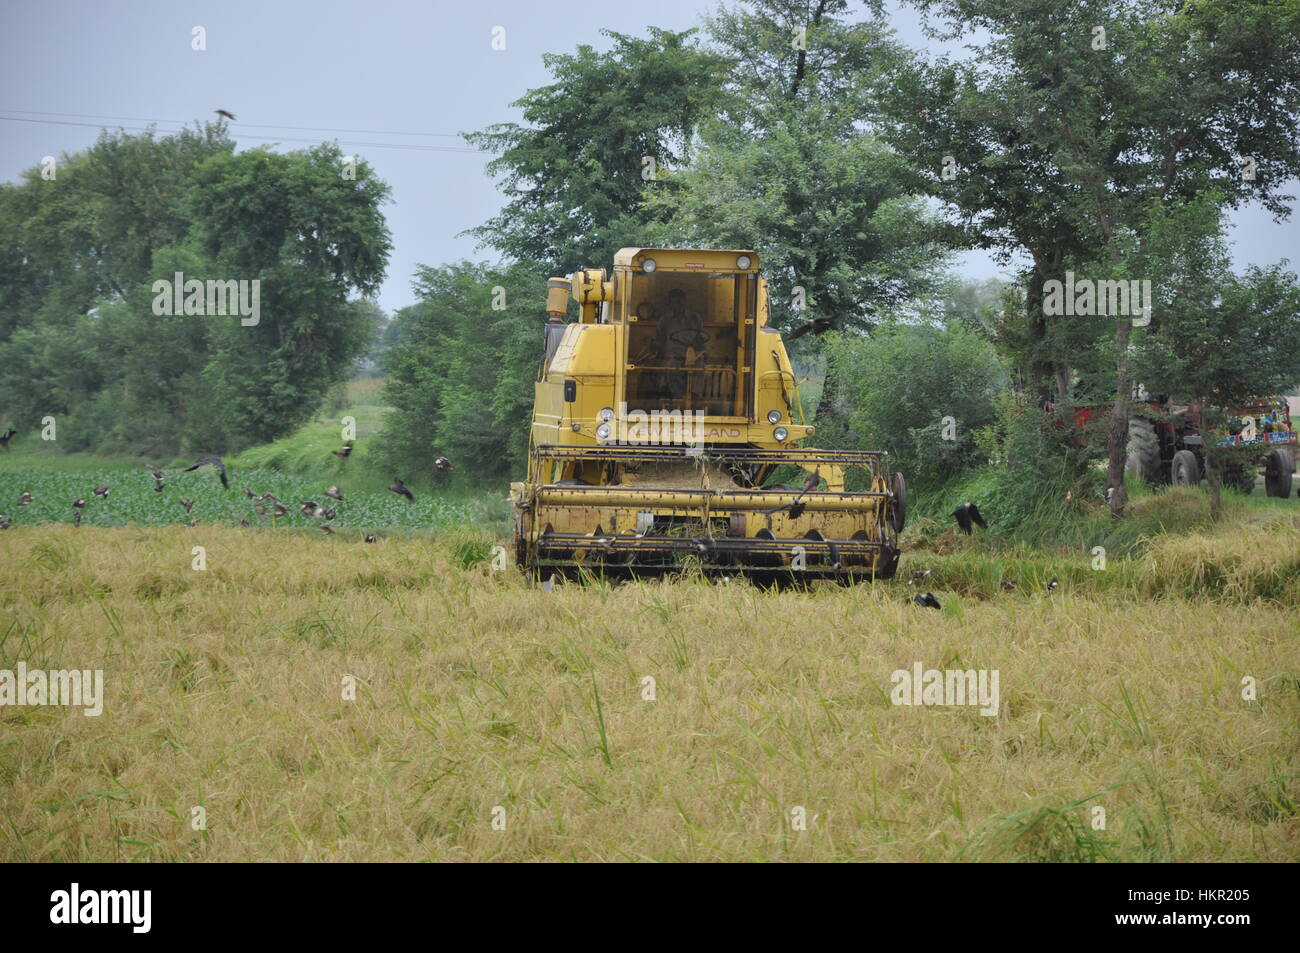 Farmer harvesting cornfield on a harvesting machine Stock Photo